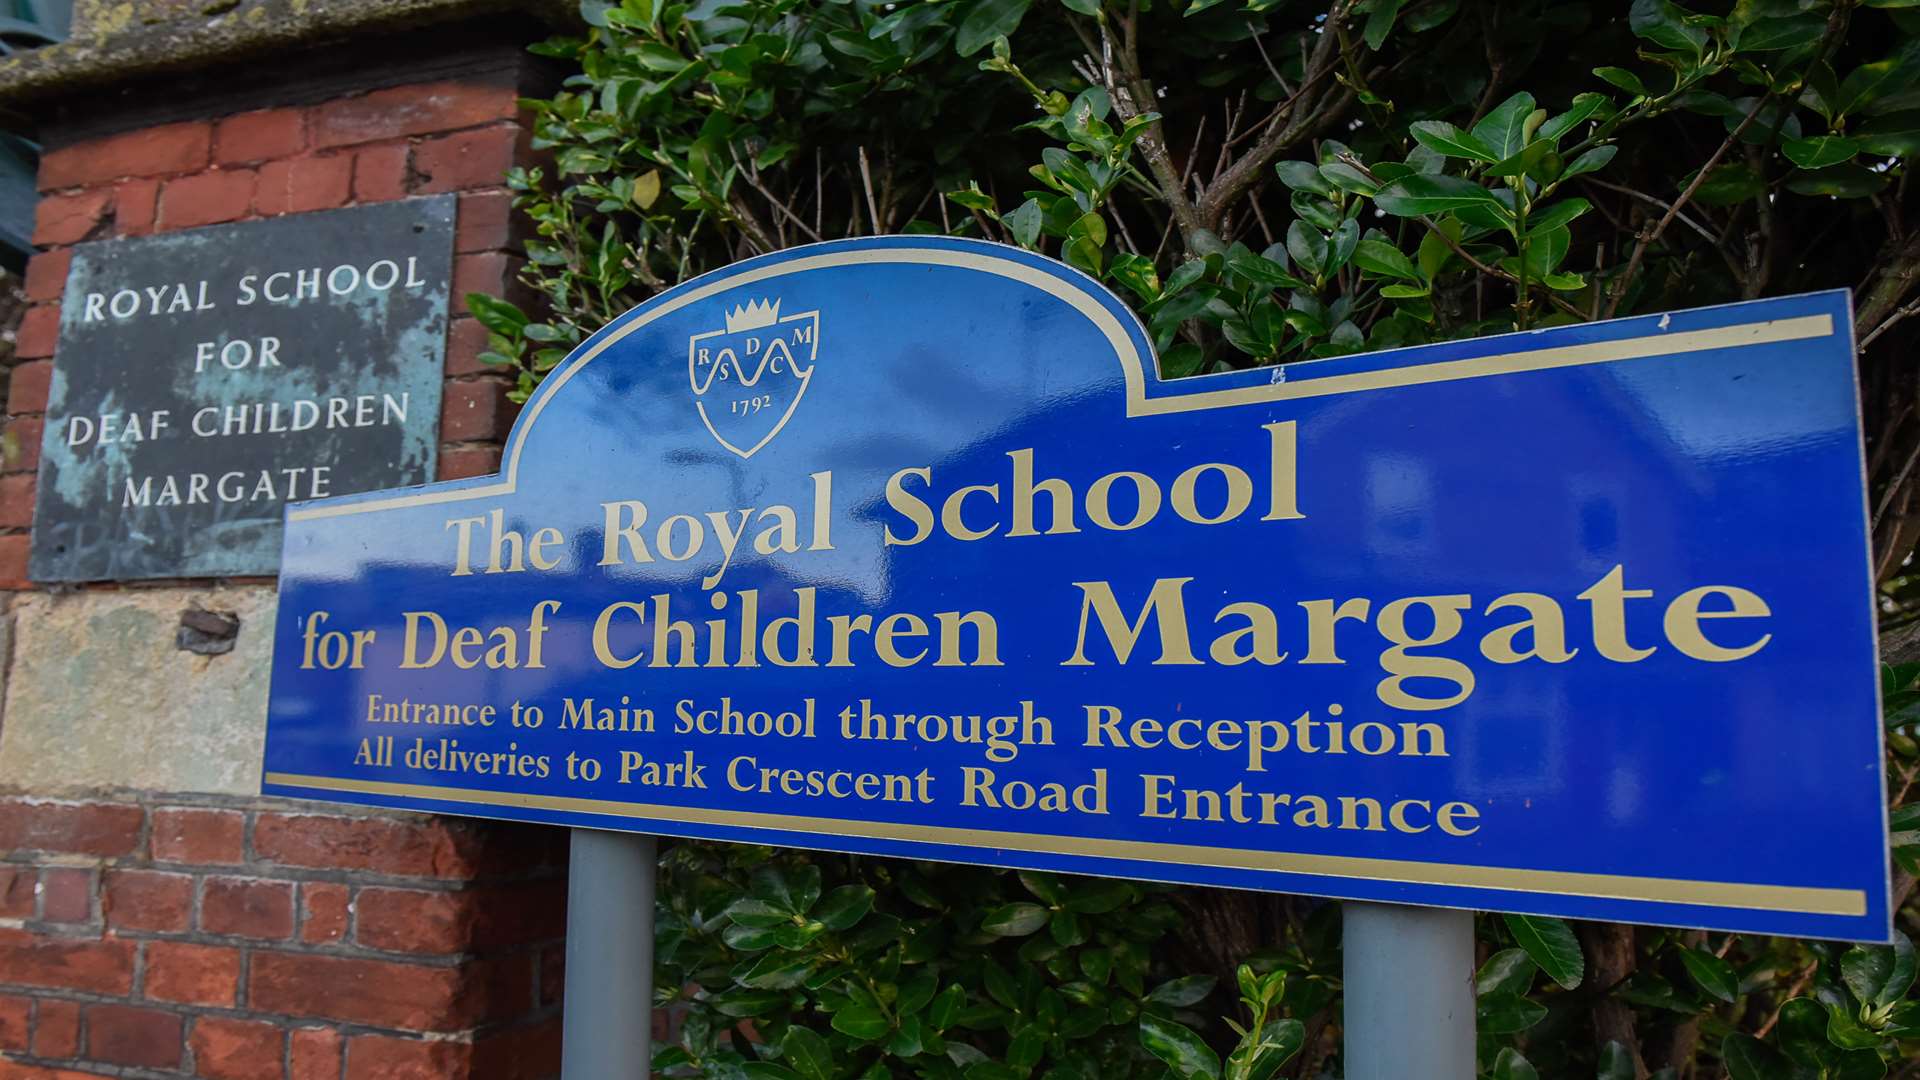 The Royal School for Deaf Children